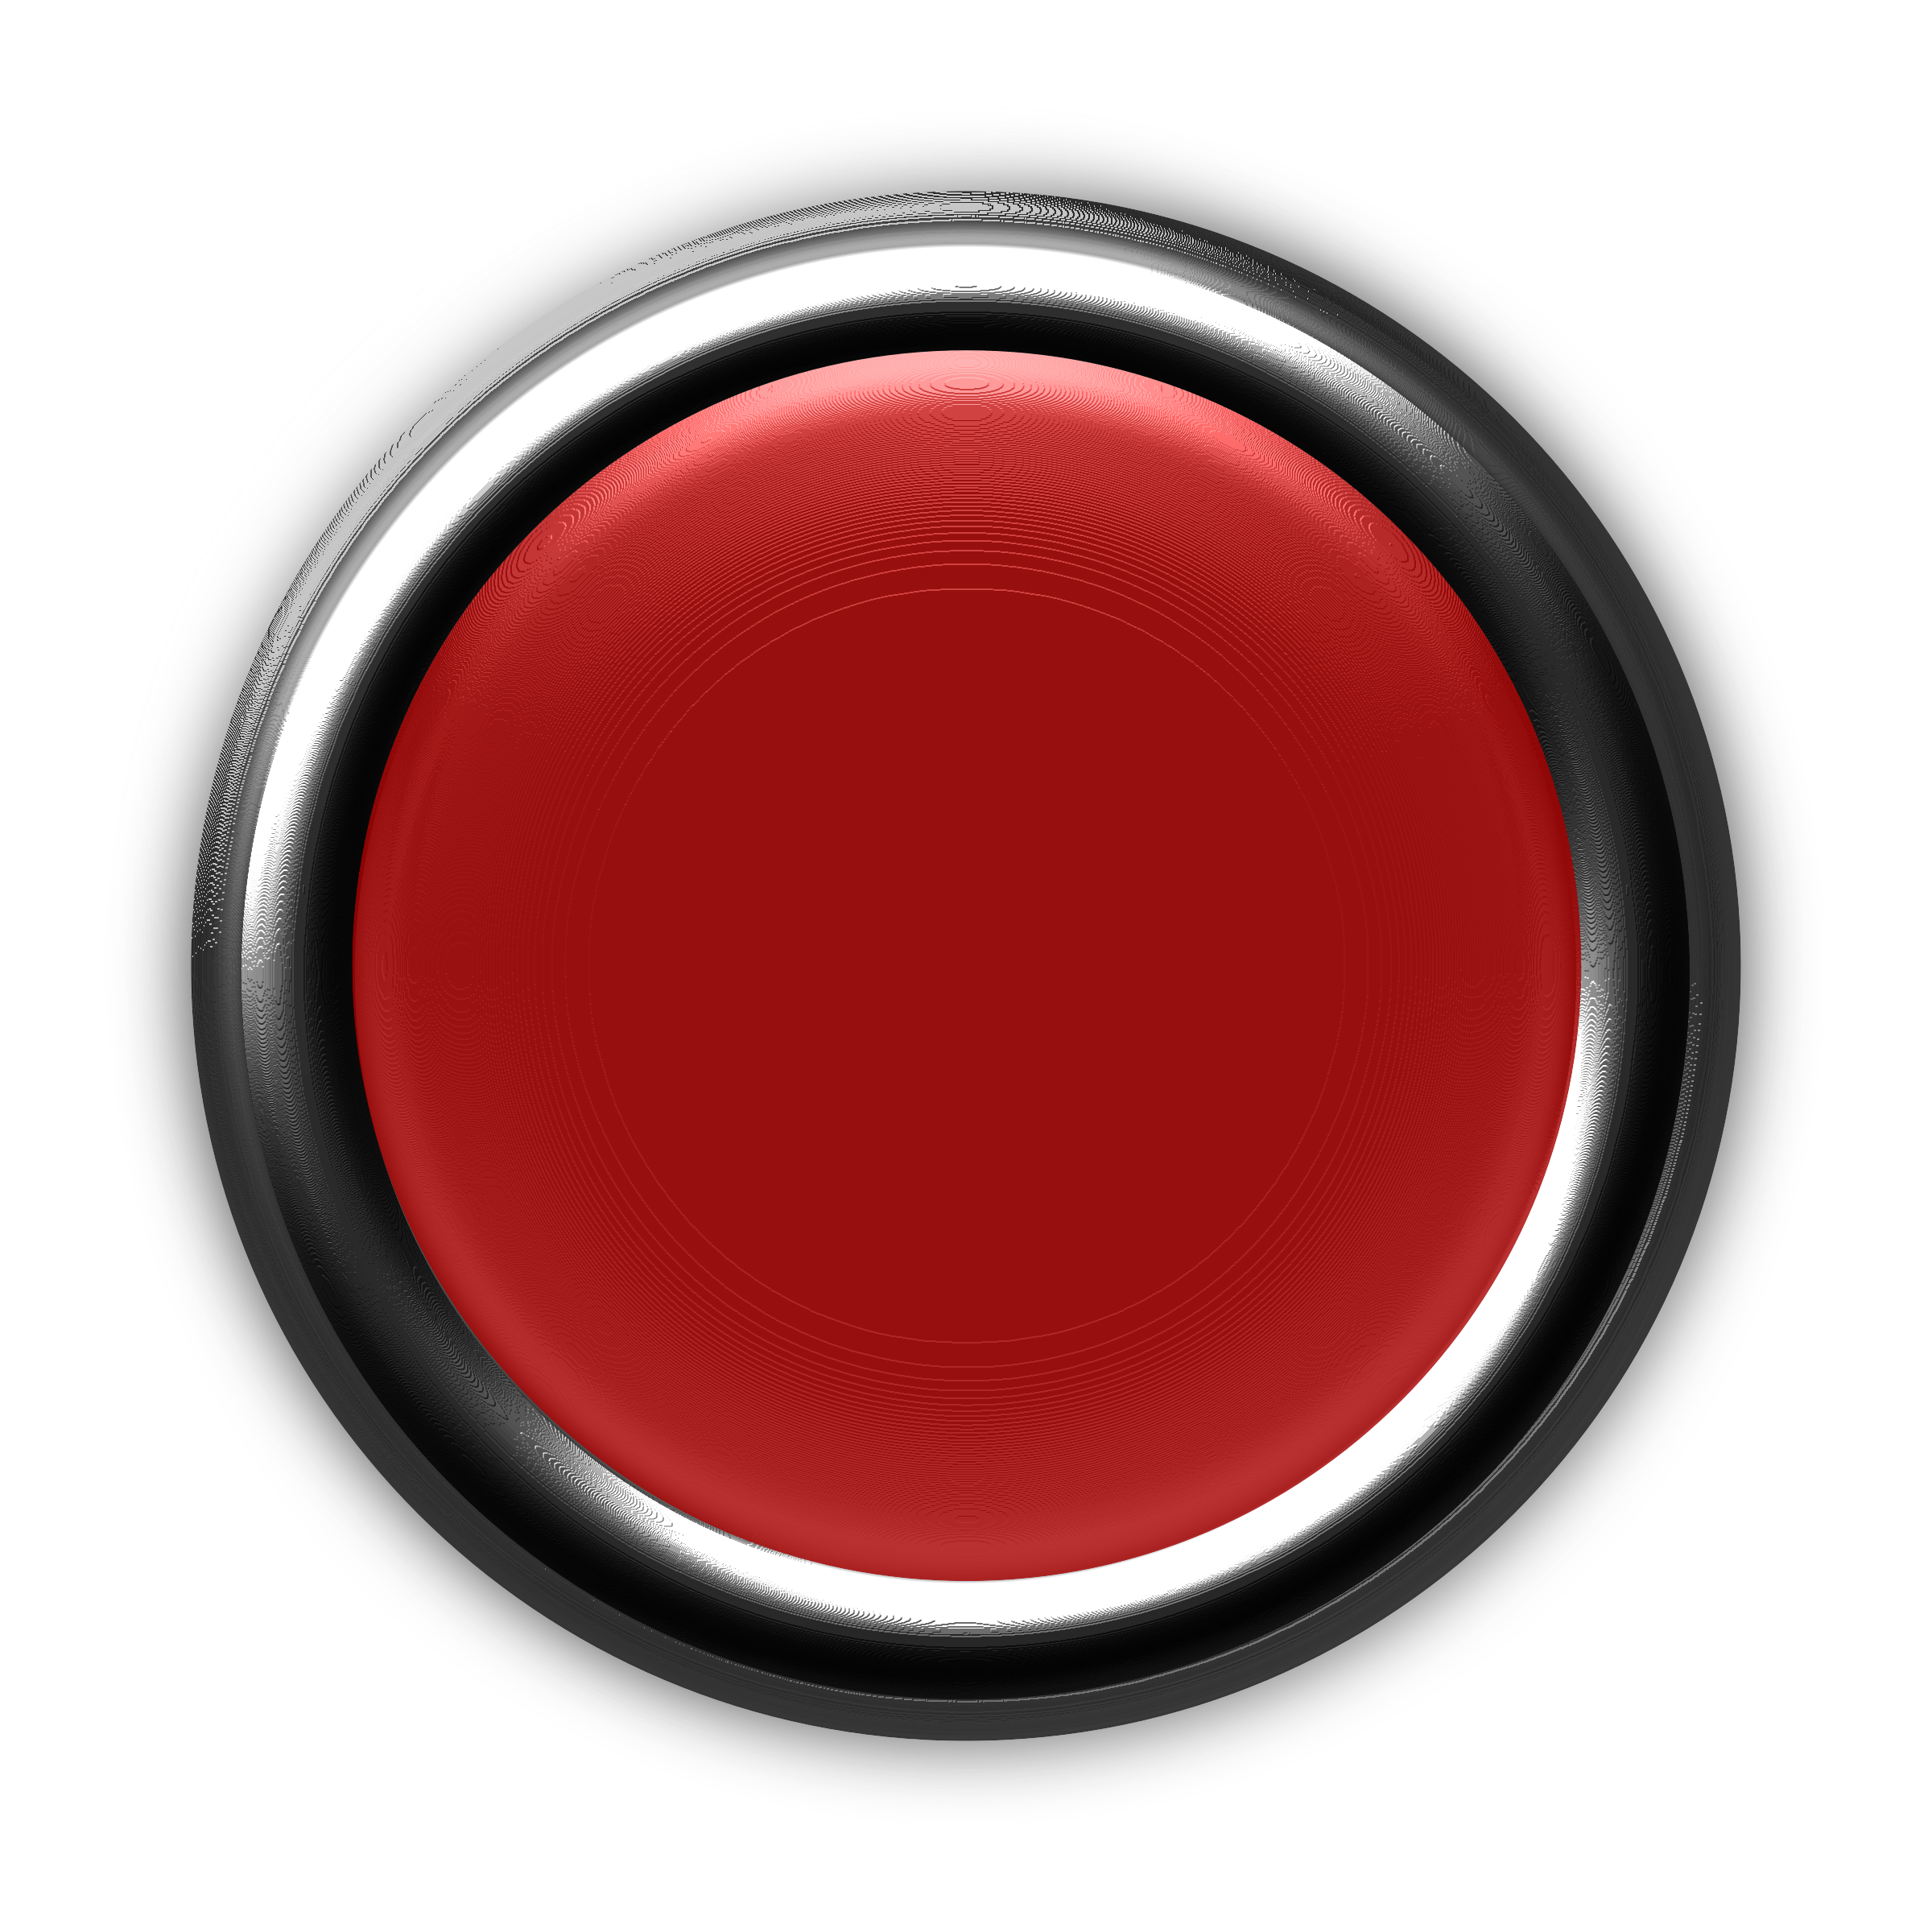 Big red button Royalty Free Vector Image - VectorStock